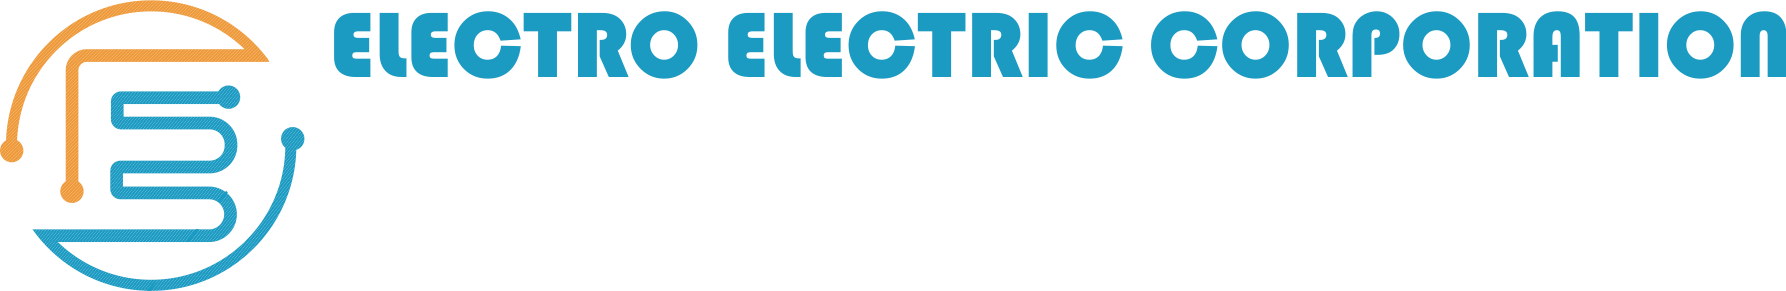 Electro Electric Corporation